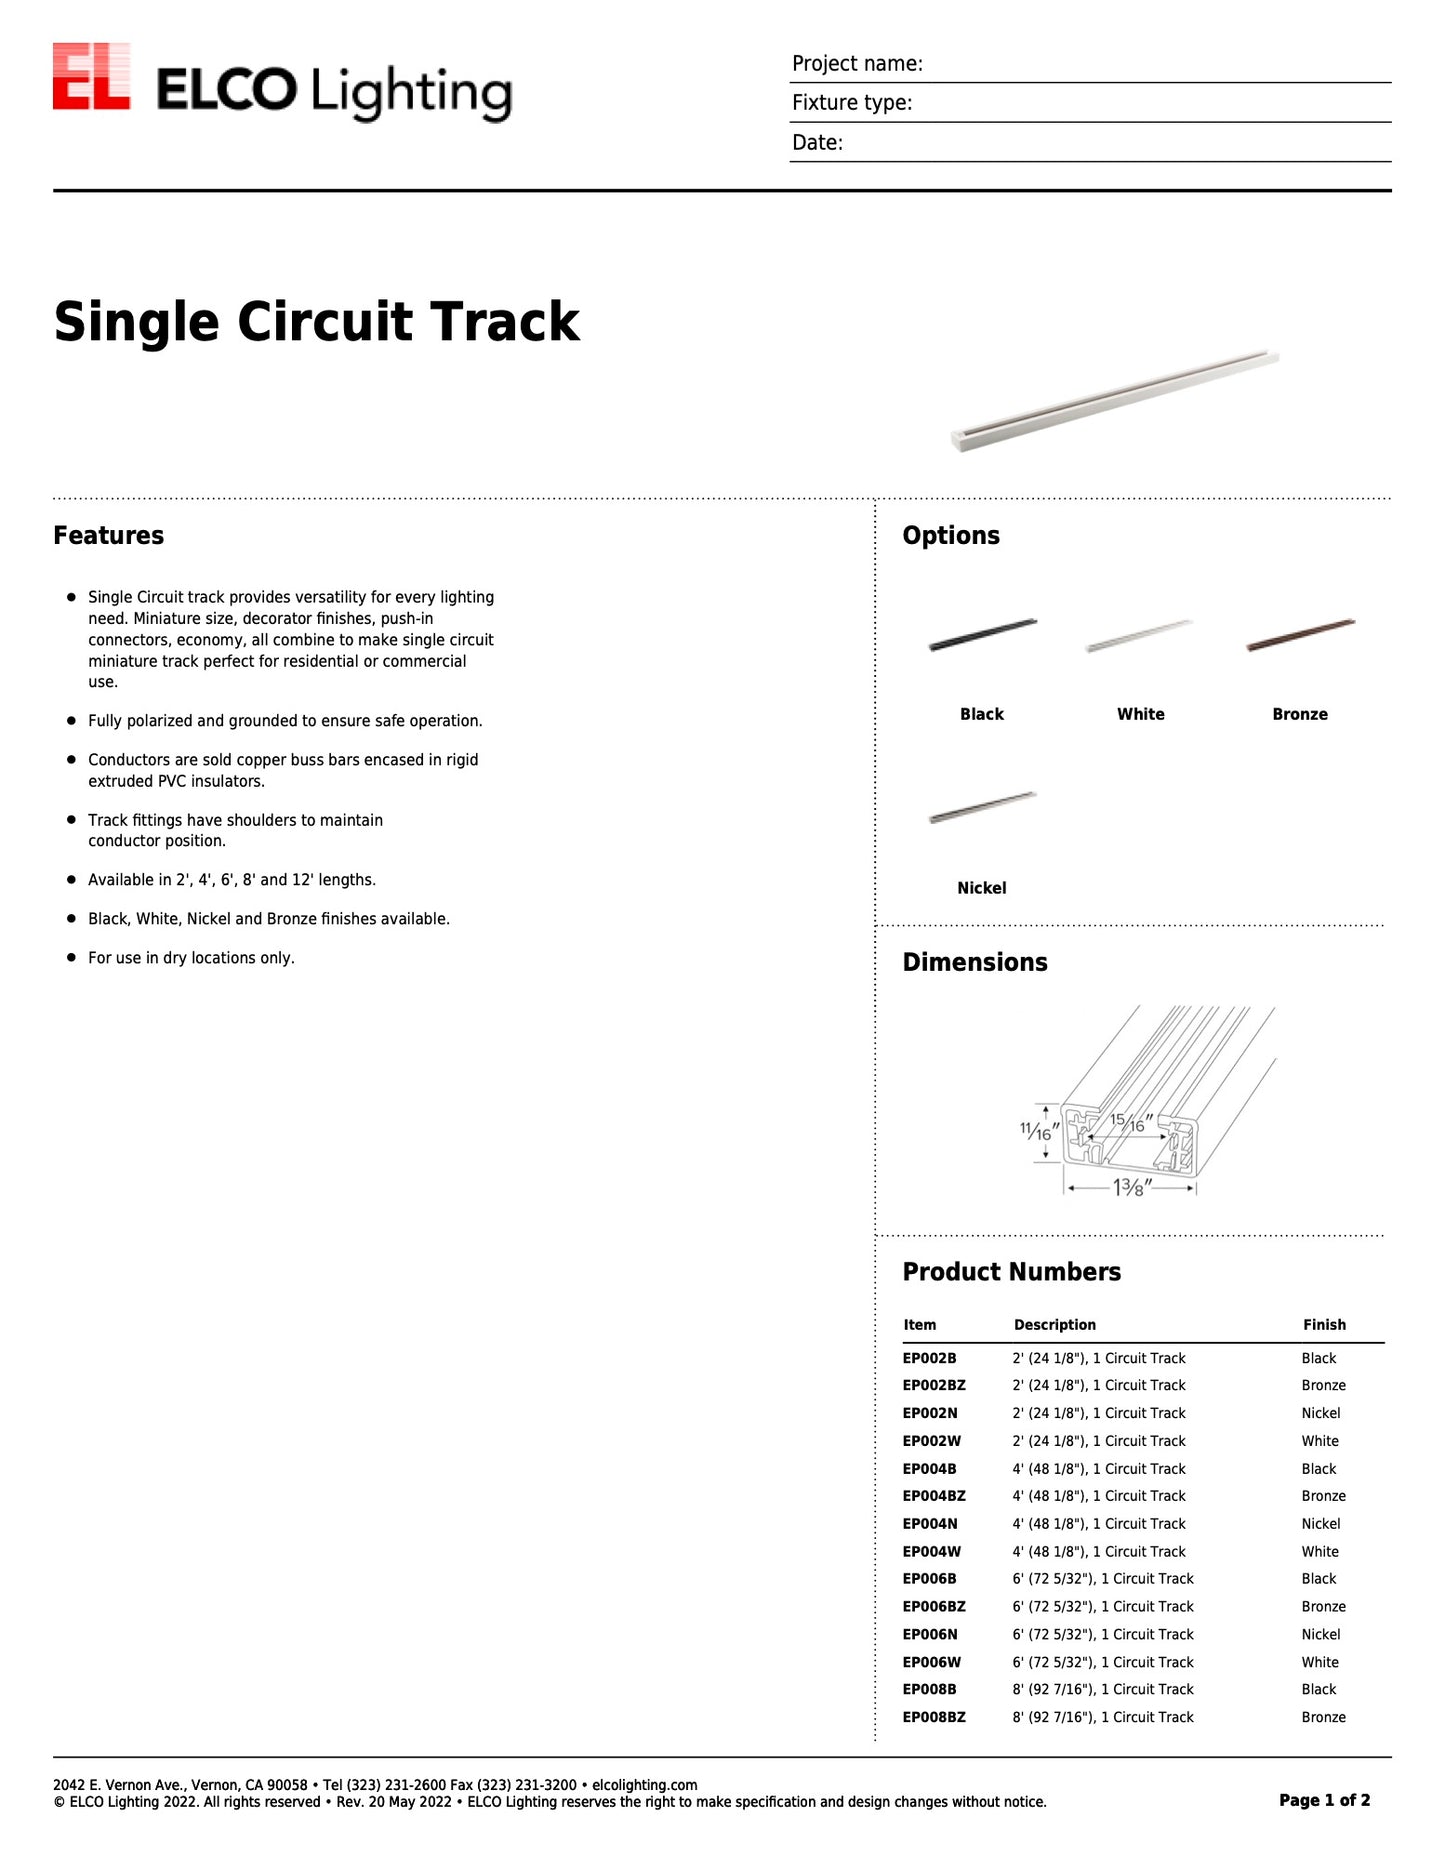 Single Circuit Track - White